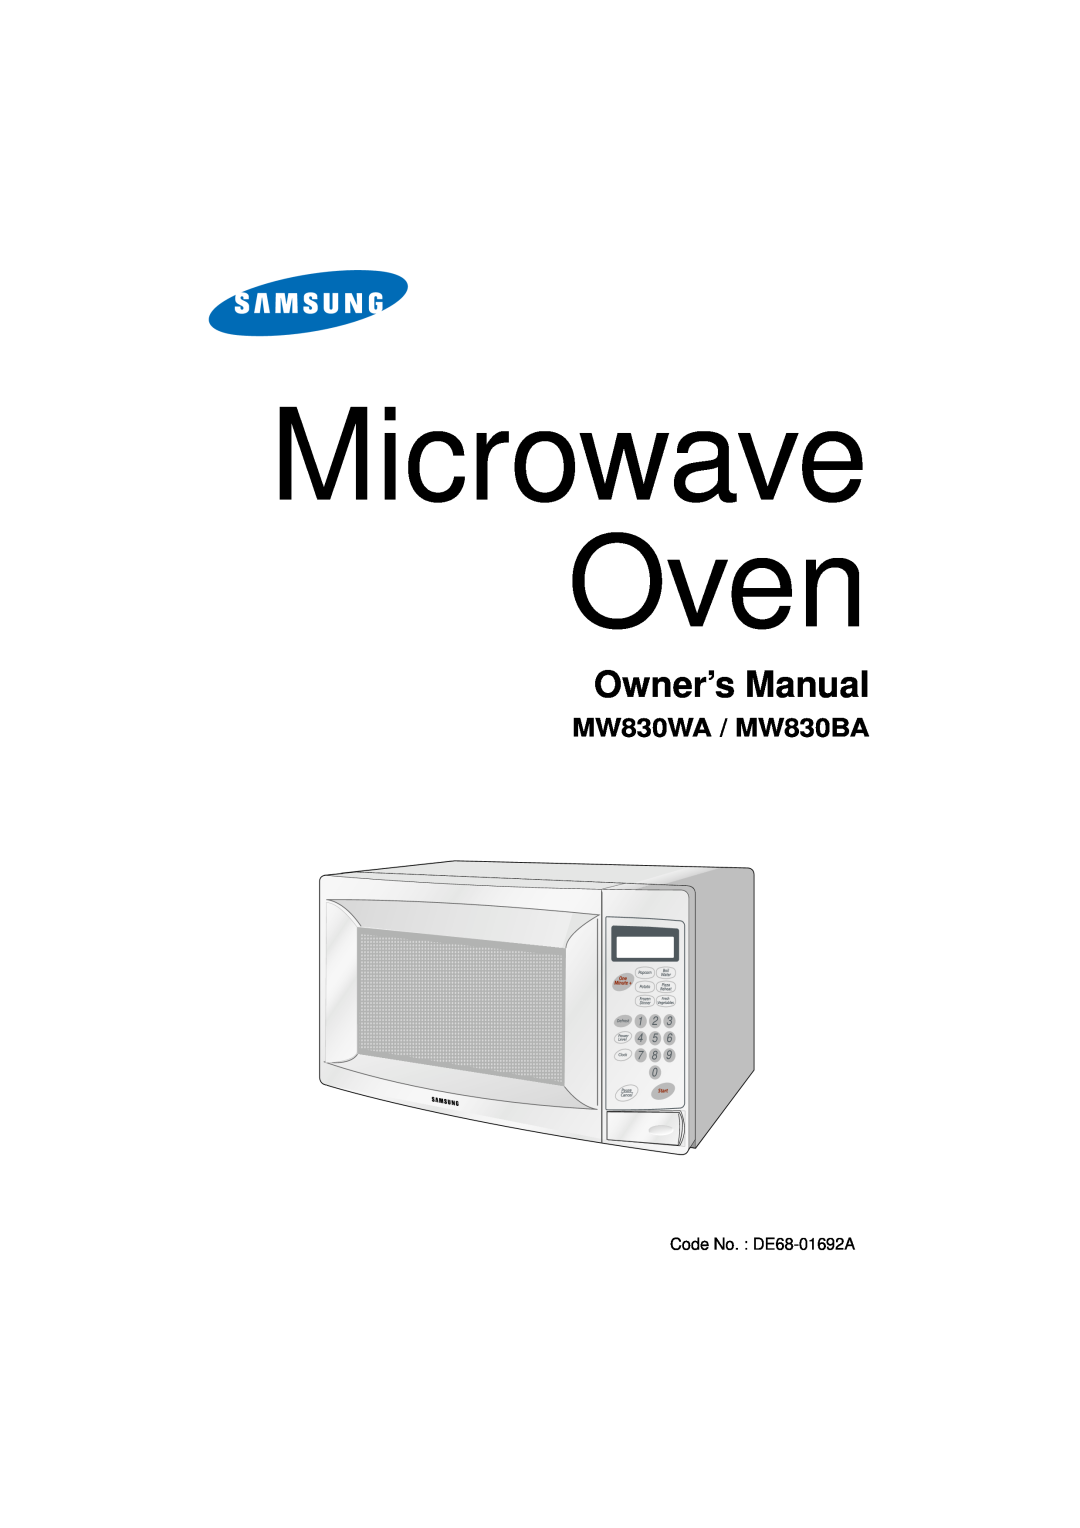 Samsung owner manual MW830WA / MW830BA, Microwave Oven, 1 2 4 